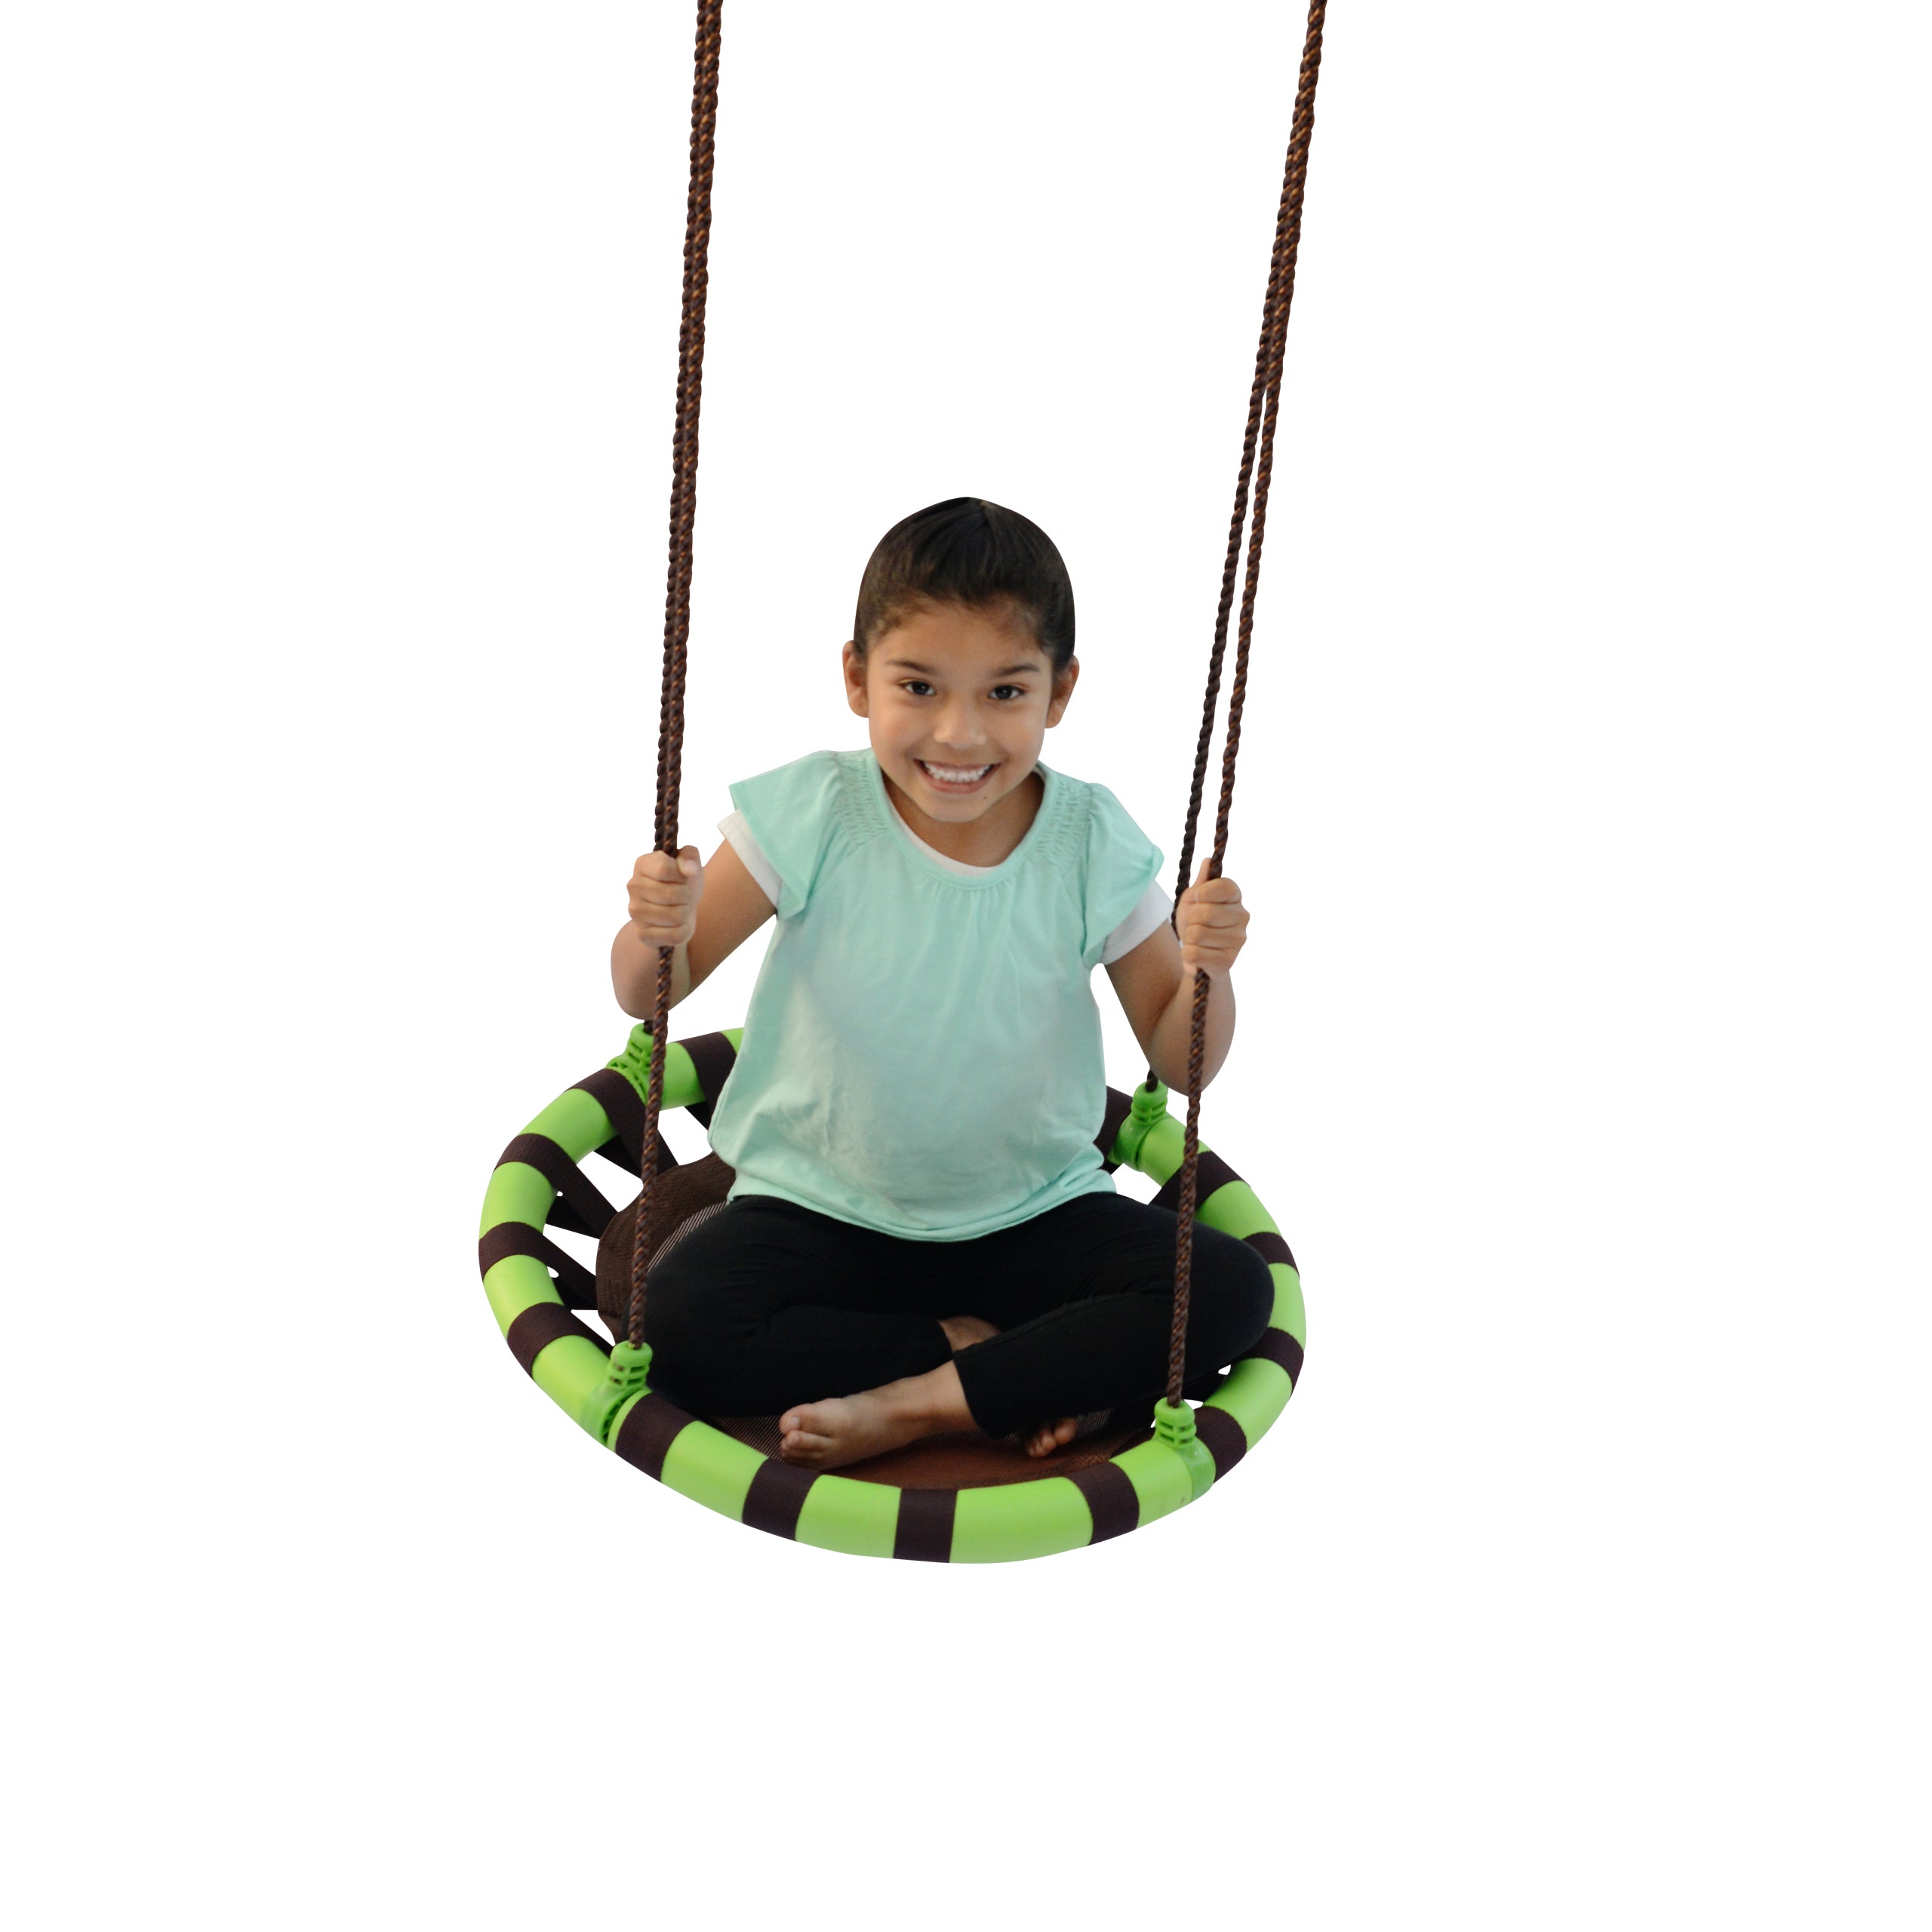 24" Orbit, Mesh-Padded Saucer Tree Swing, Holds 1 Kid